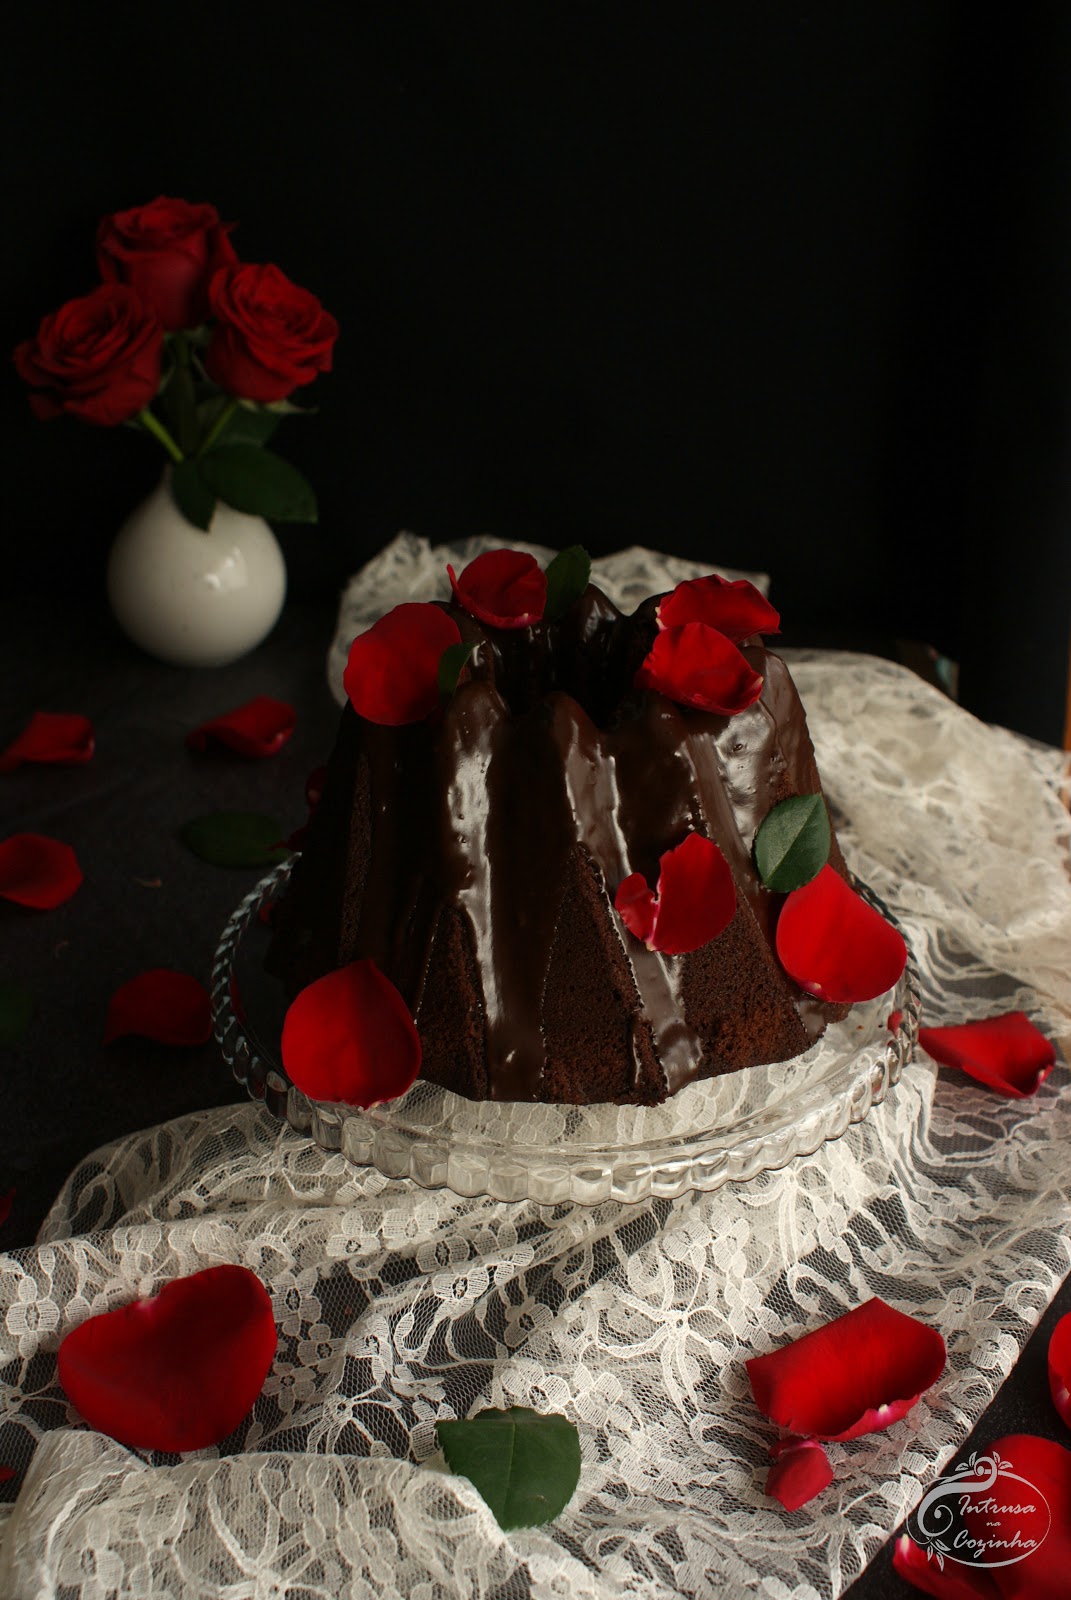 Bolo de Chocolate & Canela {Chocolate & Cinnamon Cake}